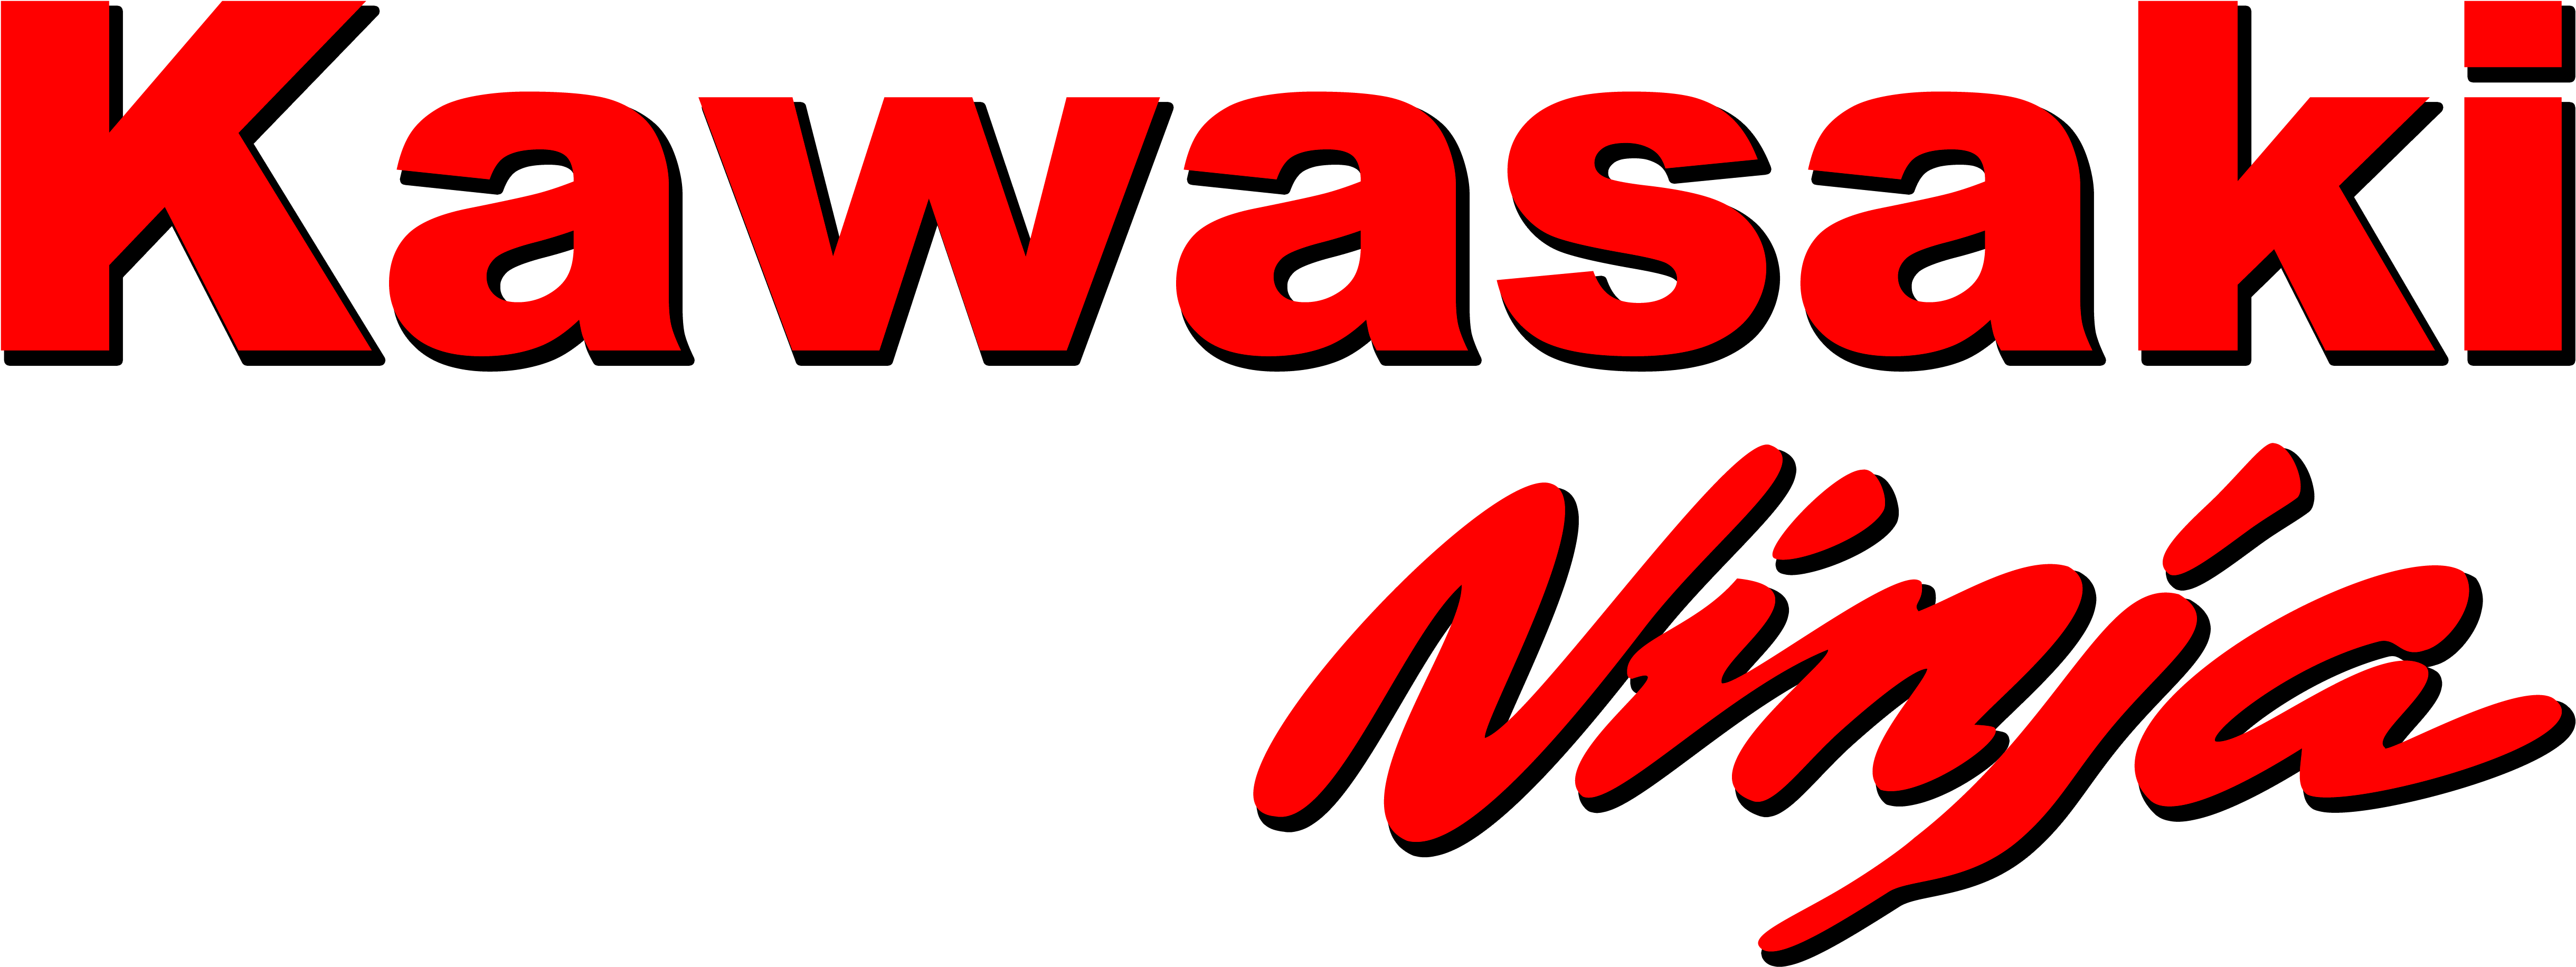 Логотип Kawasaki прозрачный образ